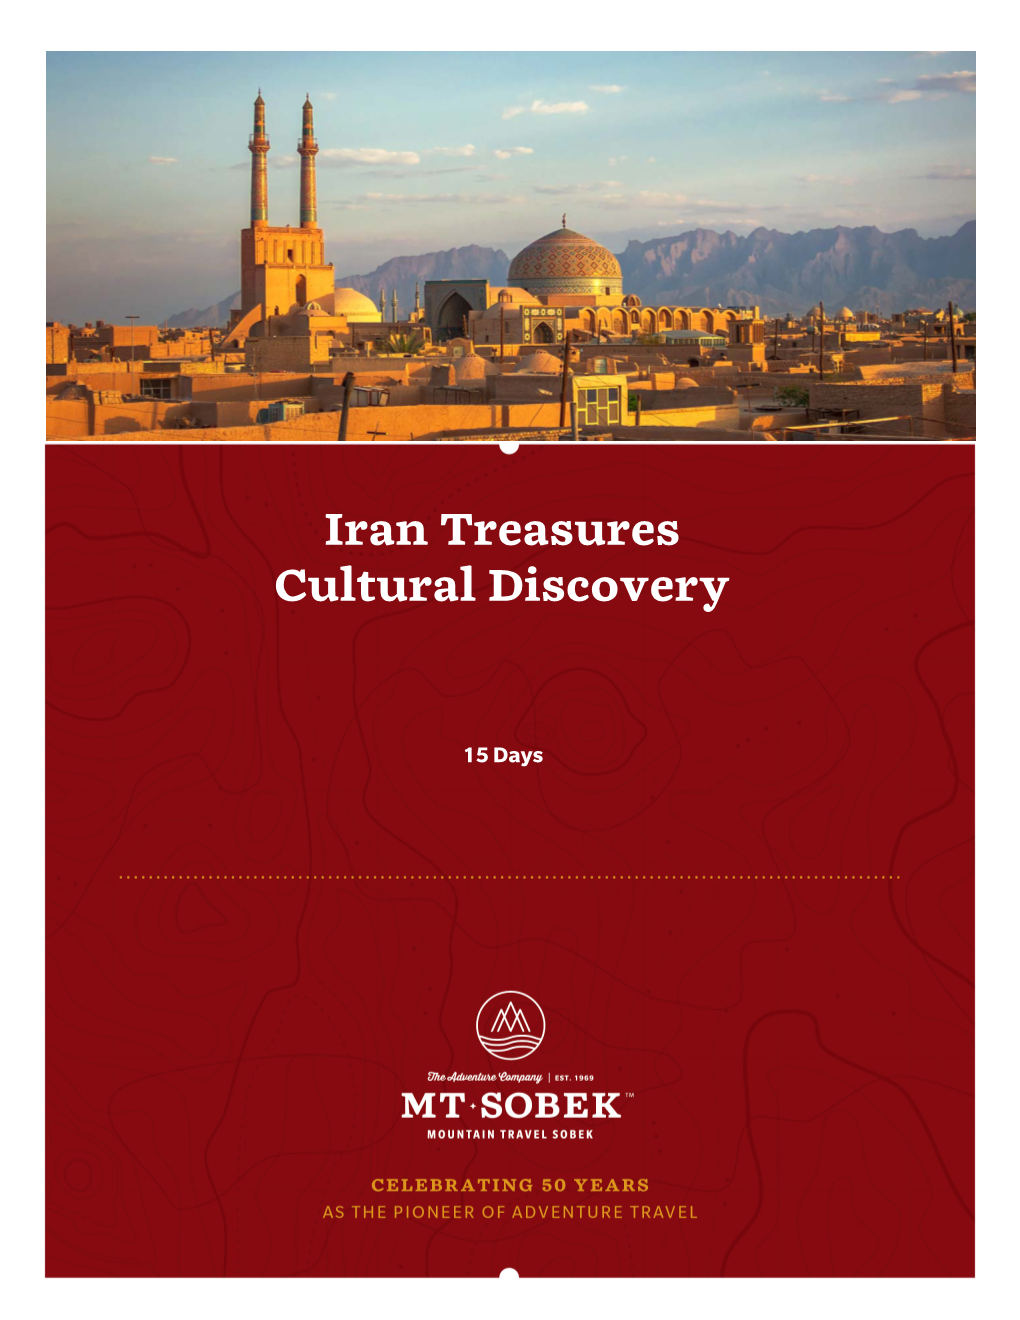 Iran Treasures Cultural Discovery